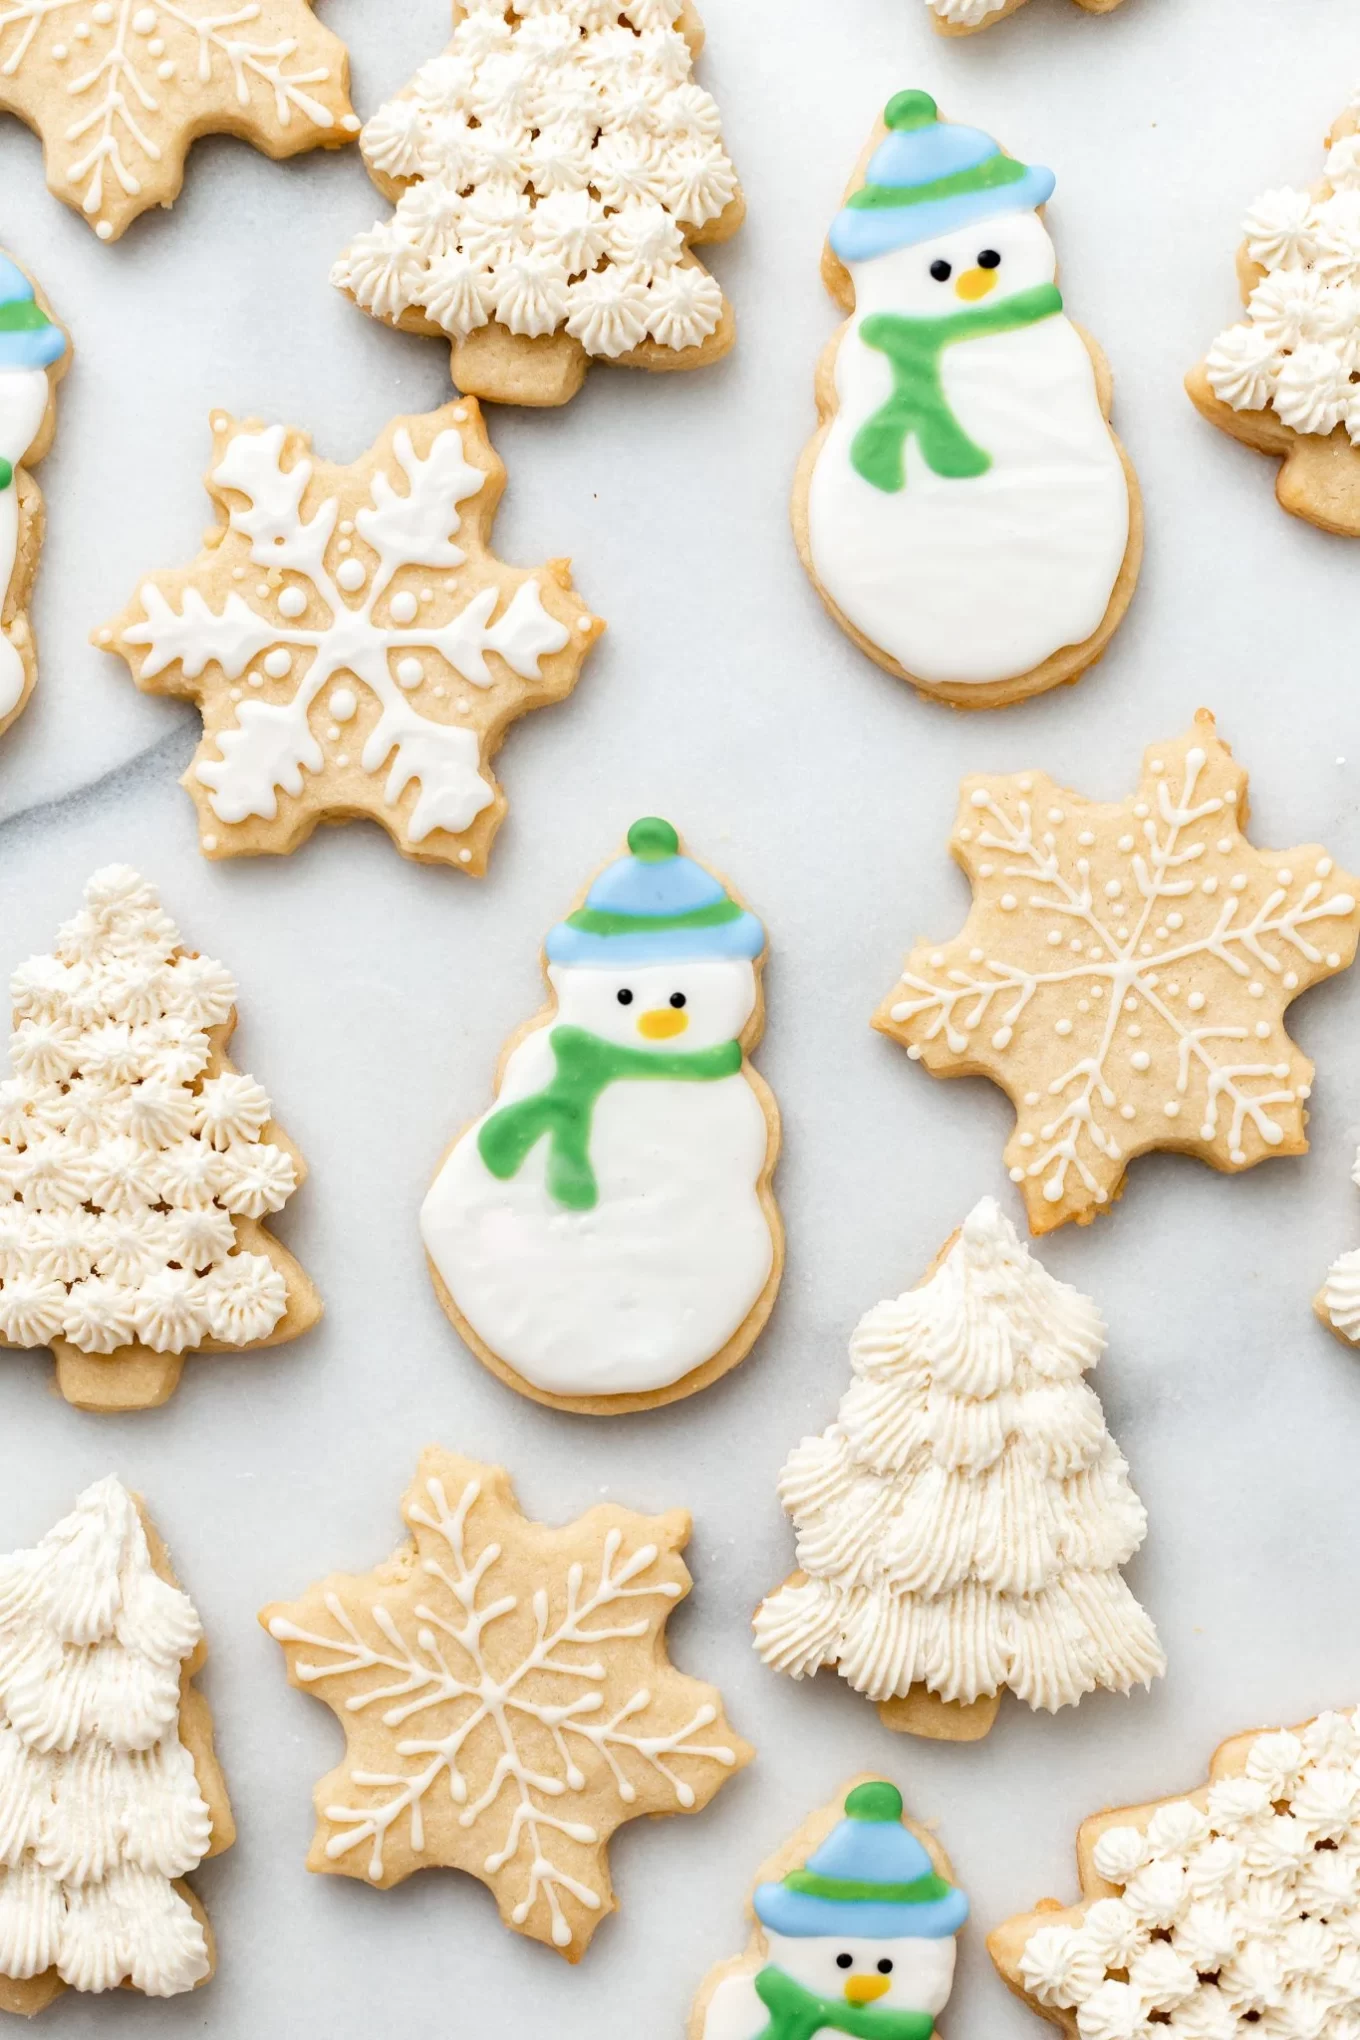 Vegan sugar cookies in snowman, Christmas tree and snowflake shapes.